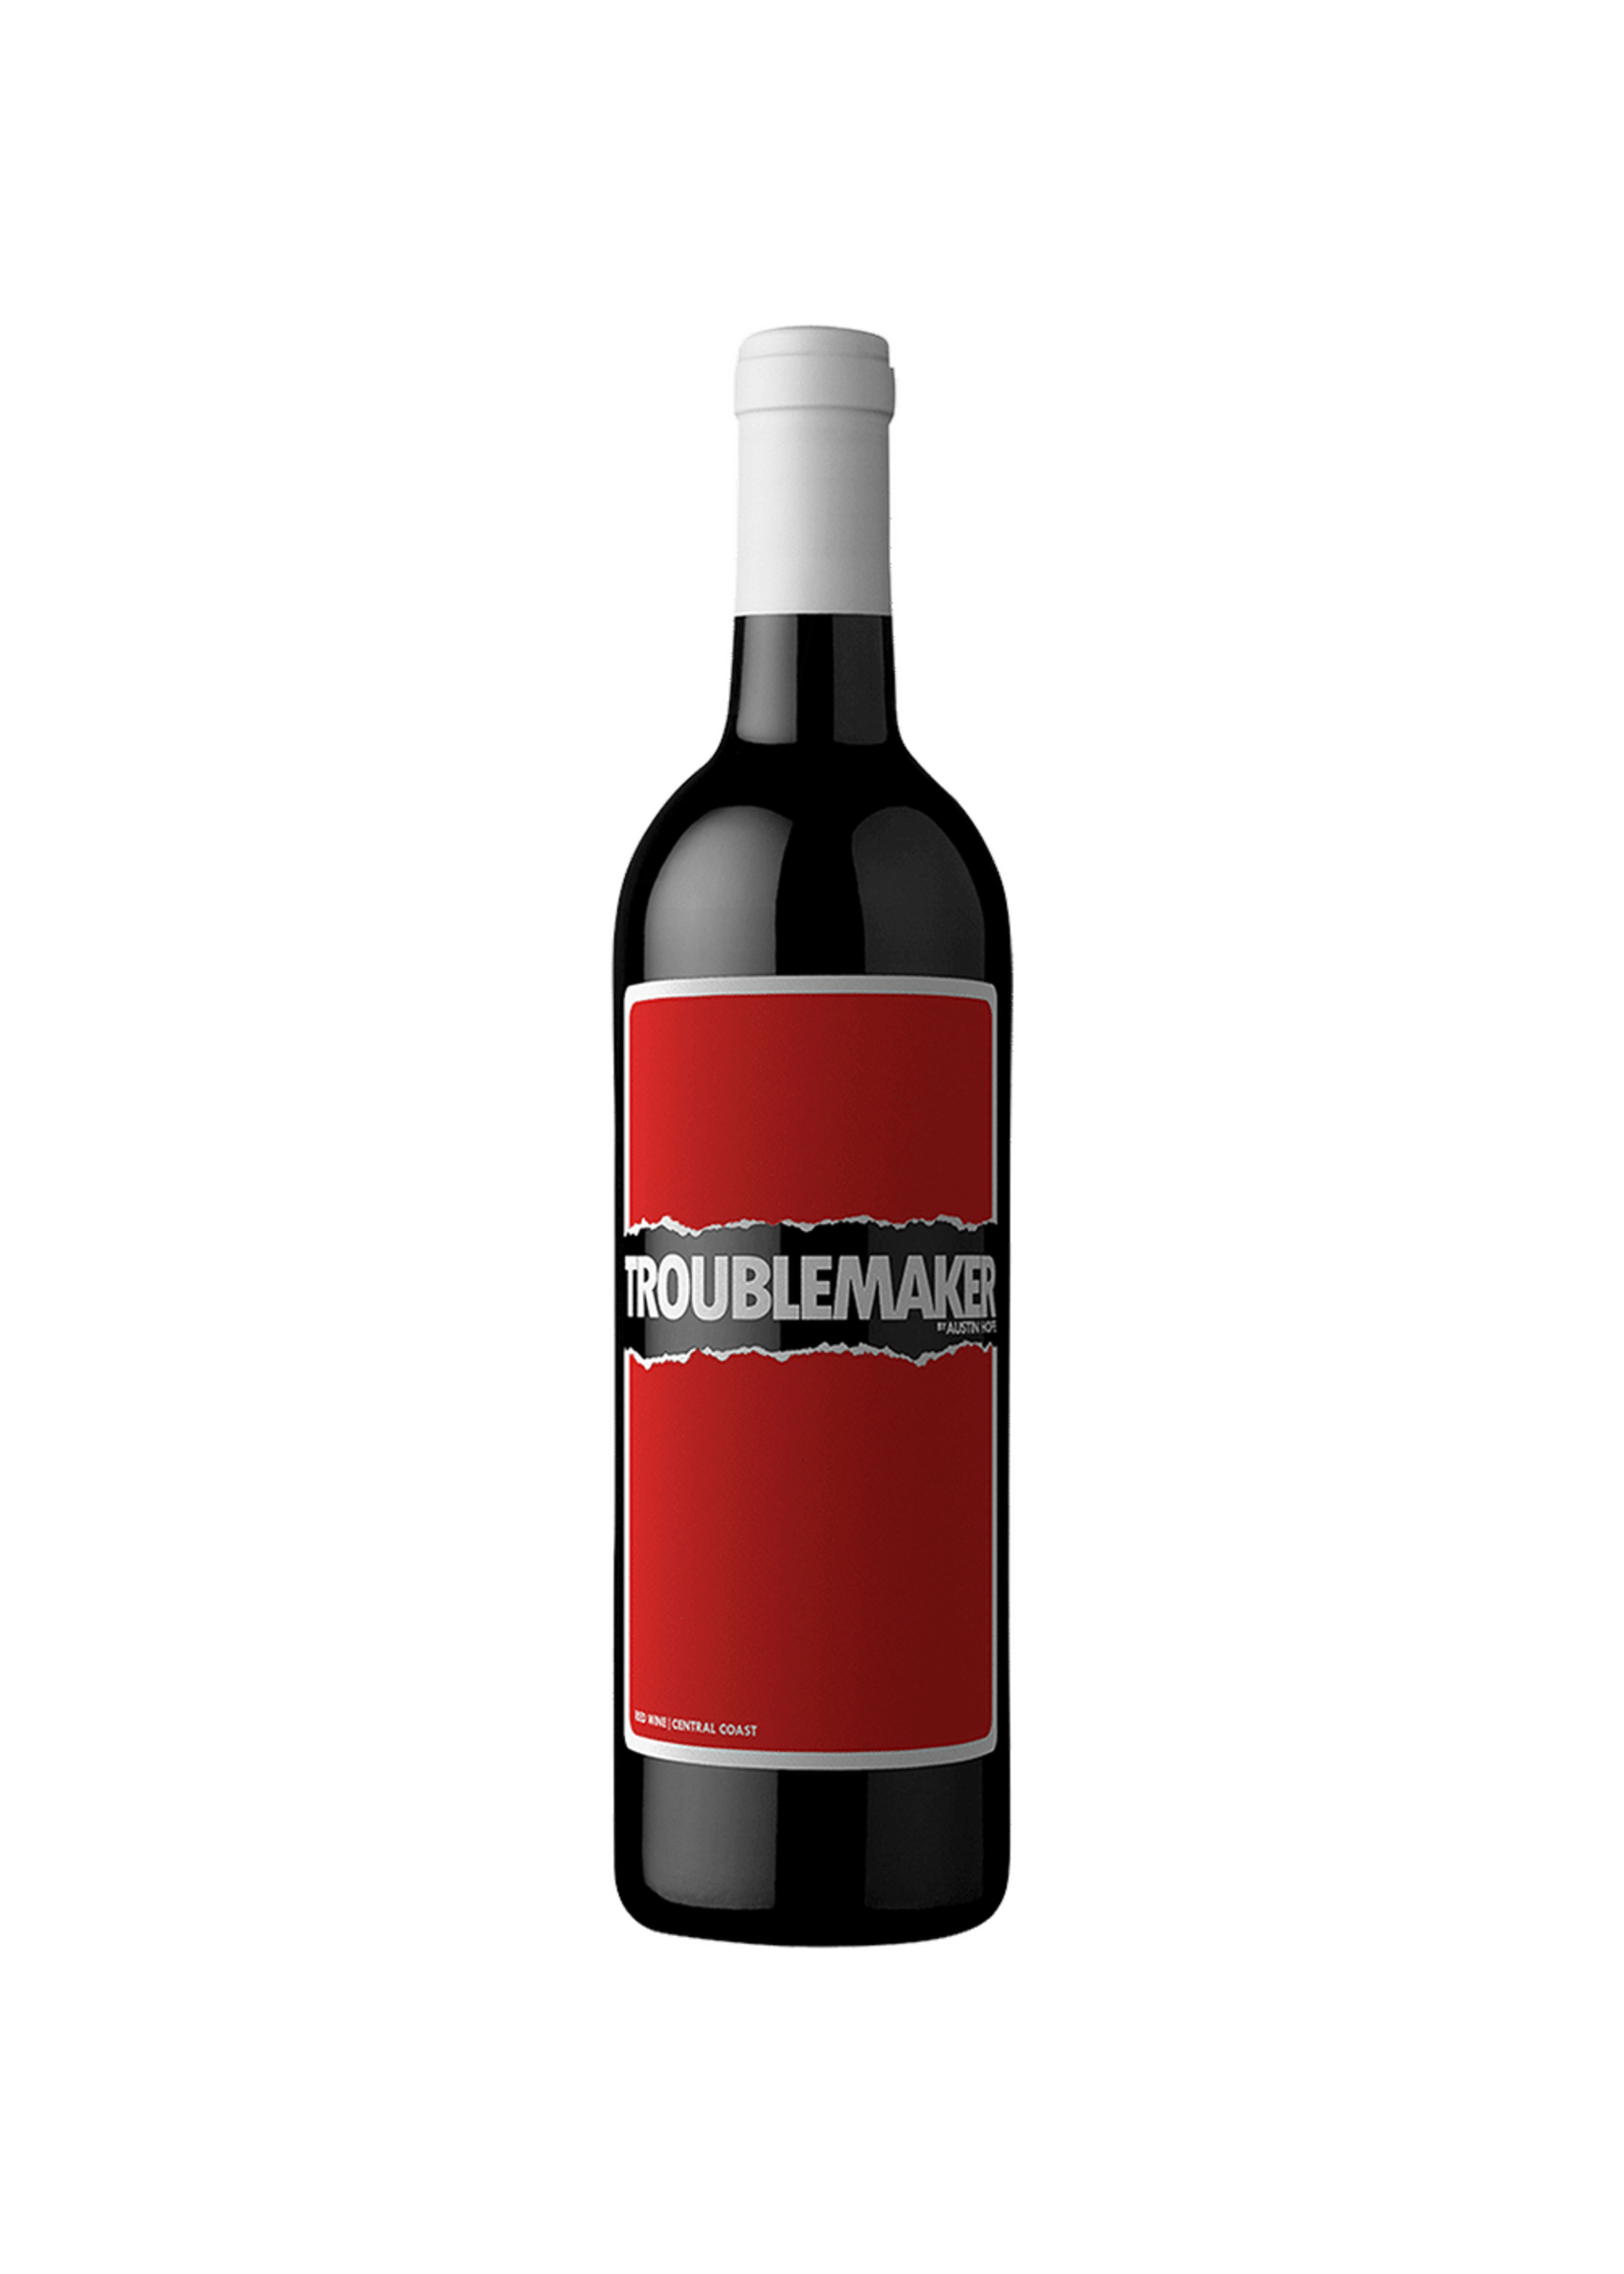 Troublemaker Red Wine 750ml